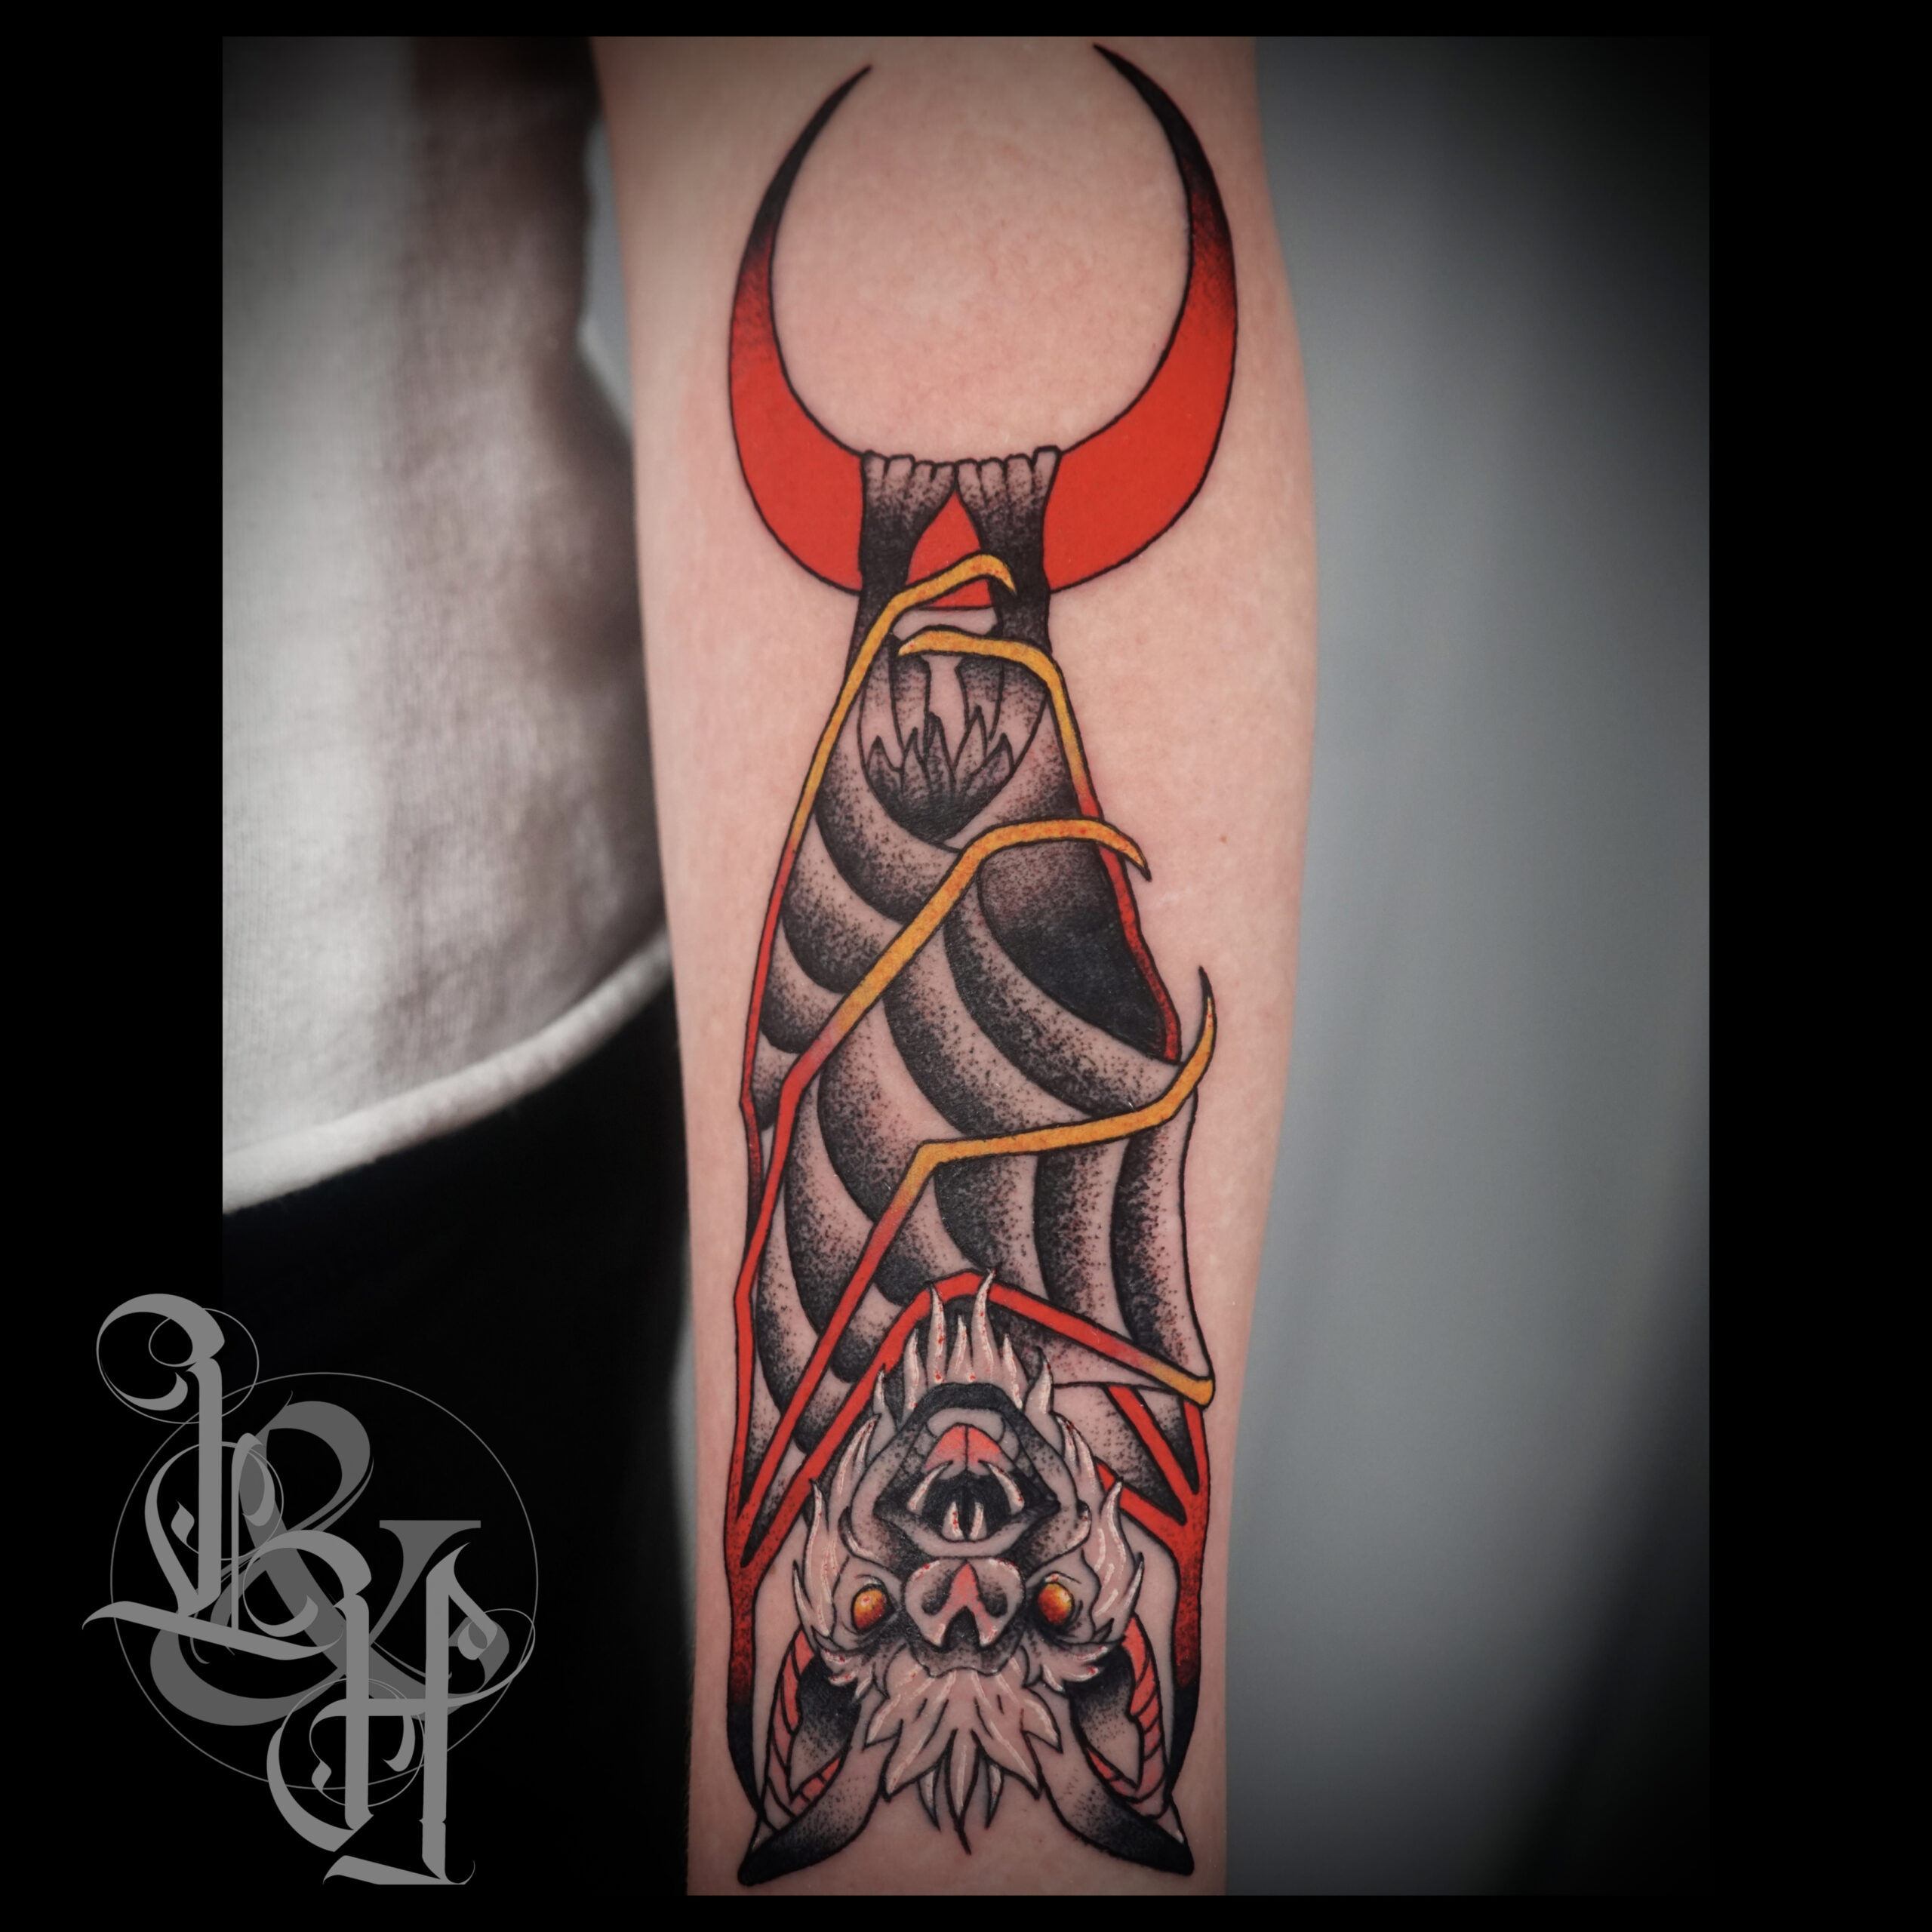 Black Bat tattoo flash by Cosmotchi on DeviantArt